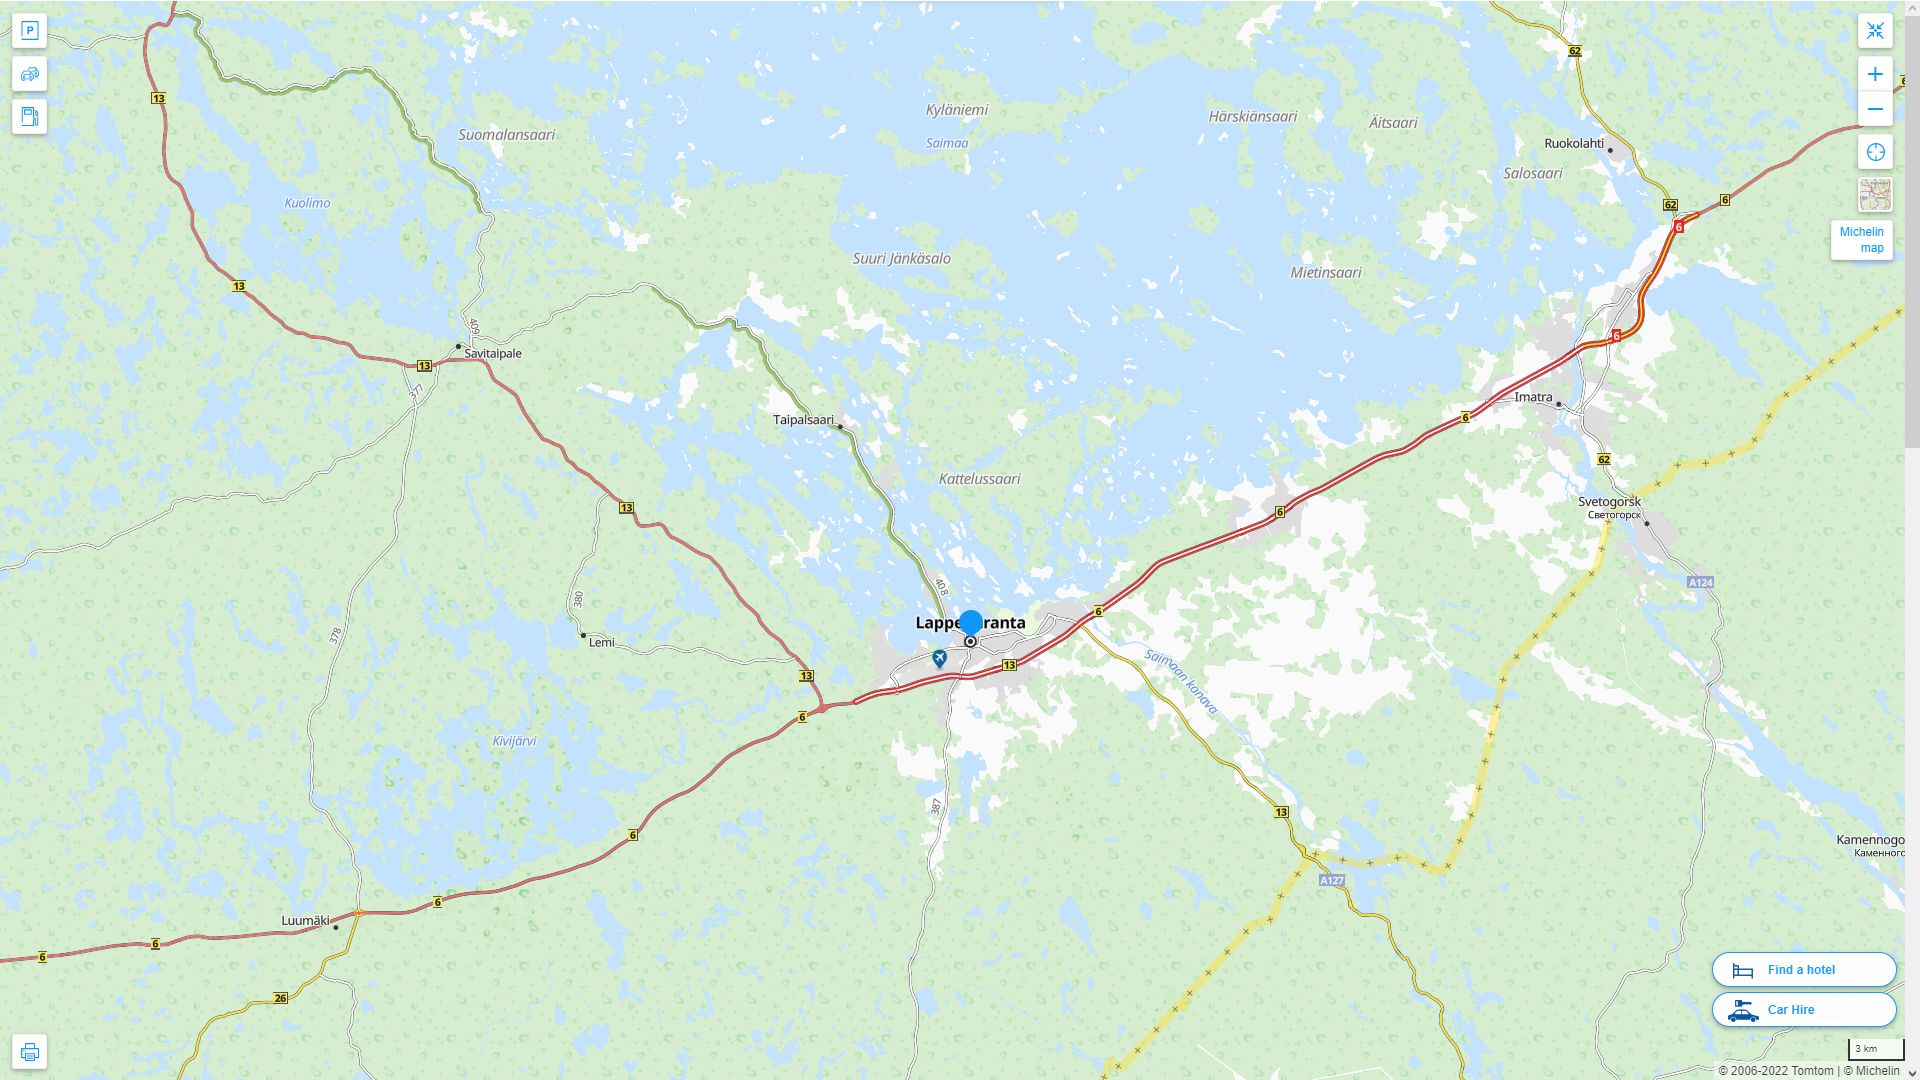 Lappeenranta Highway and Road Map